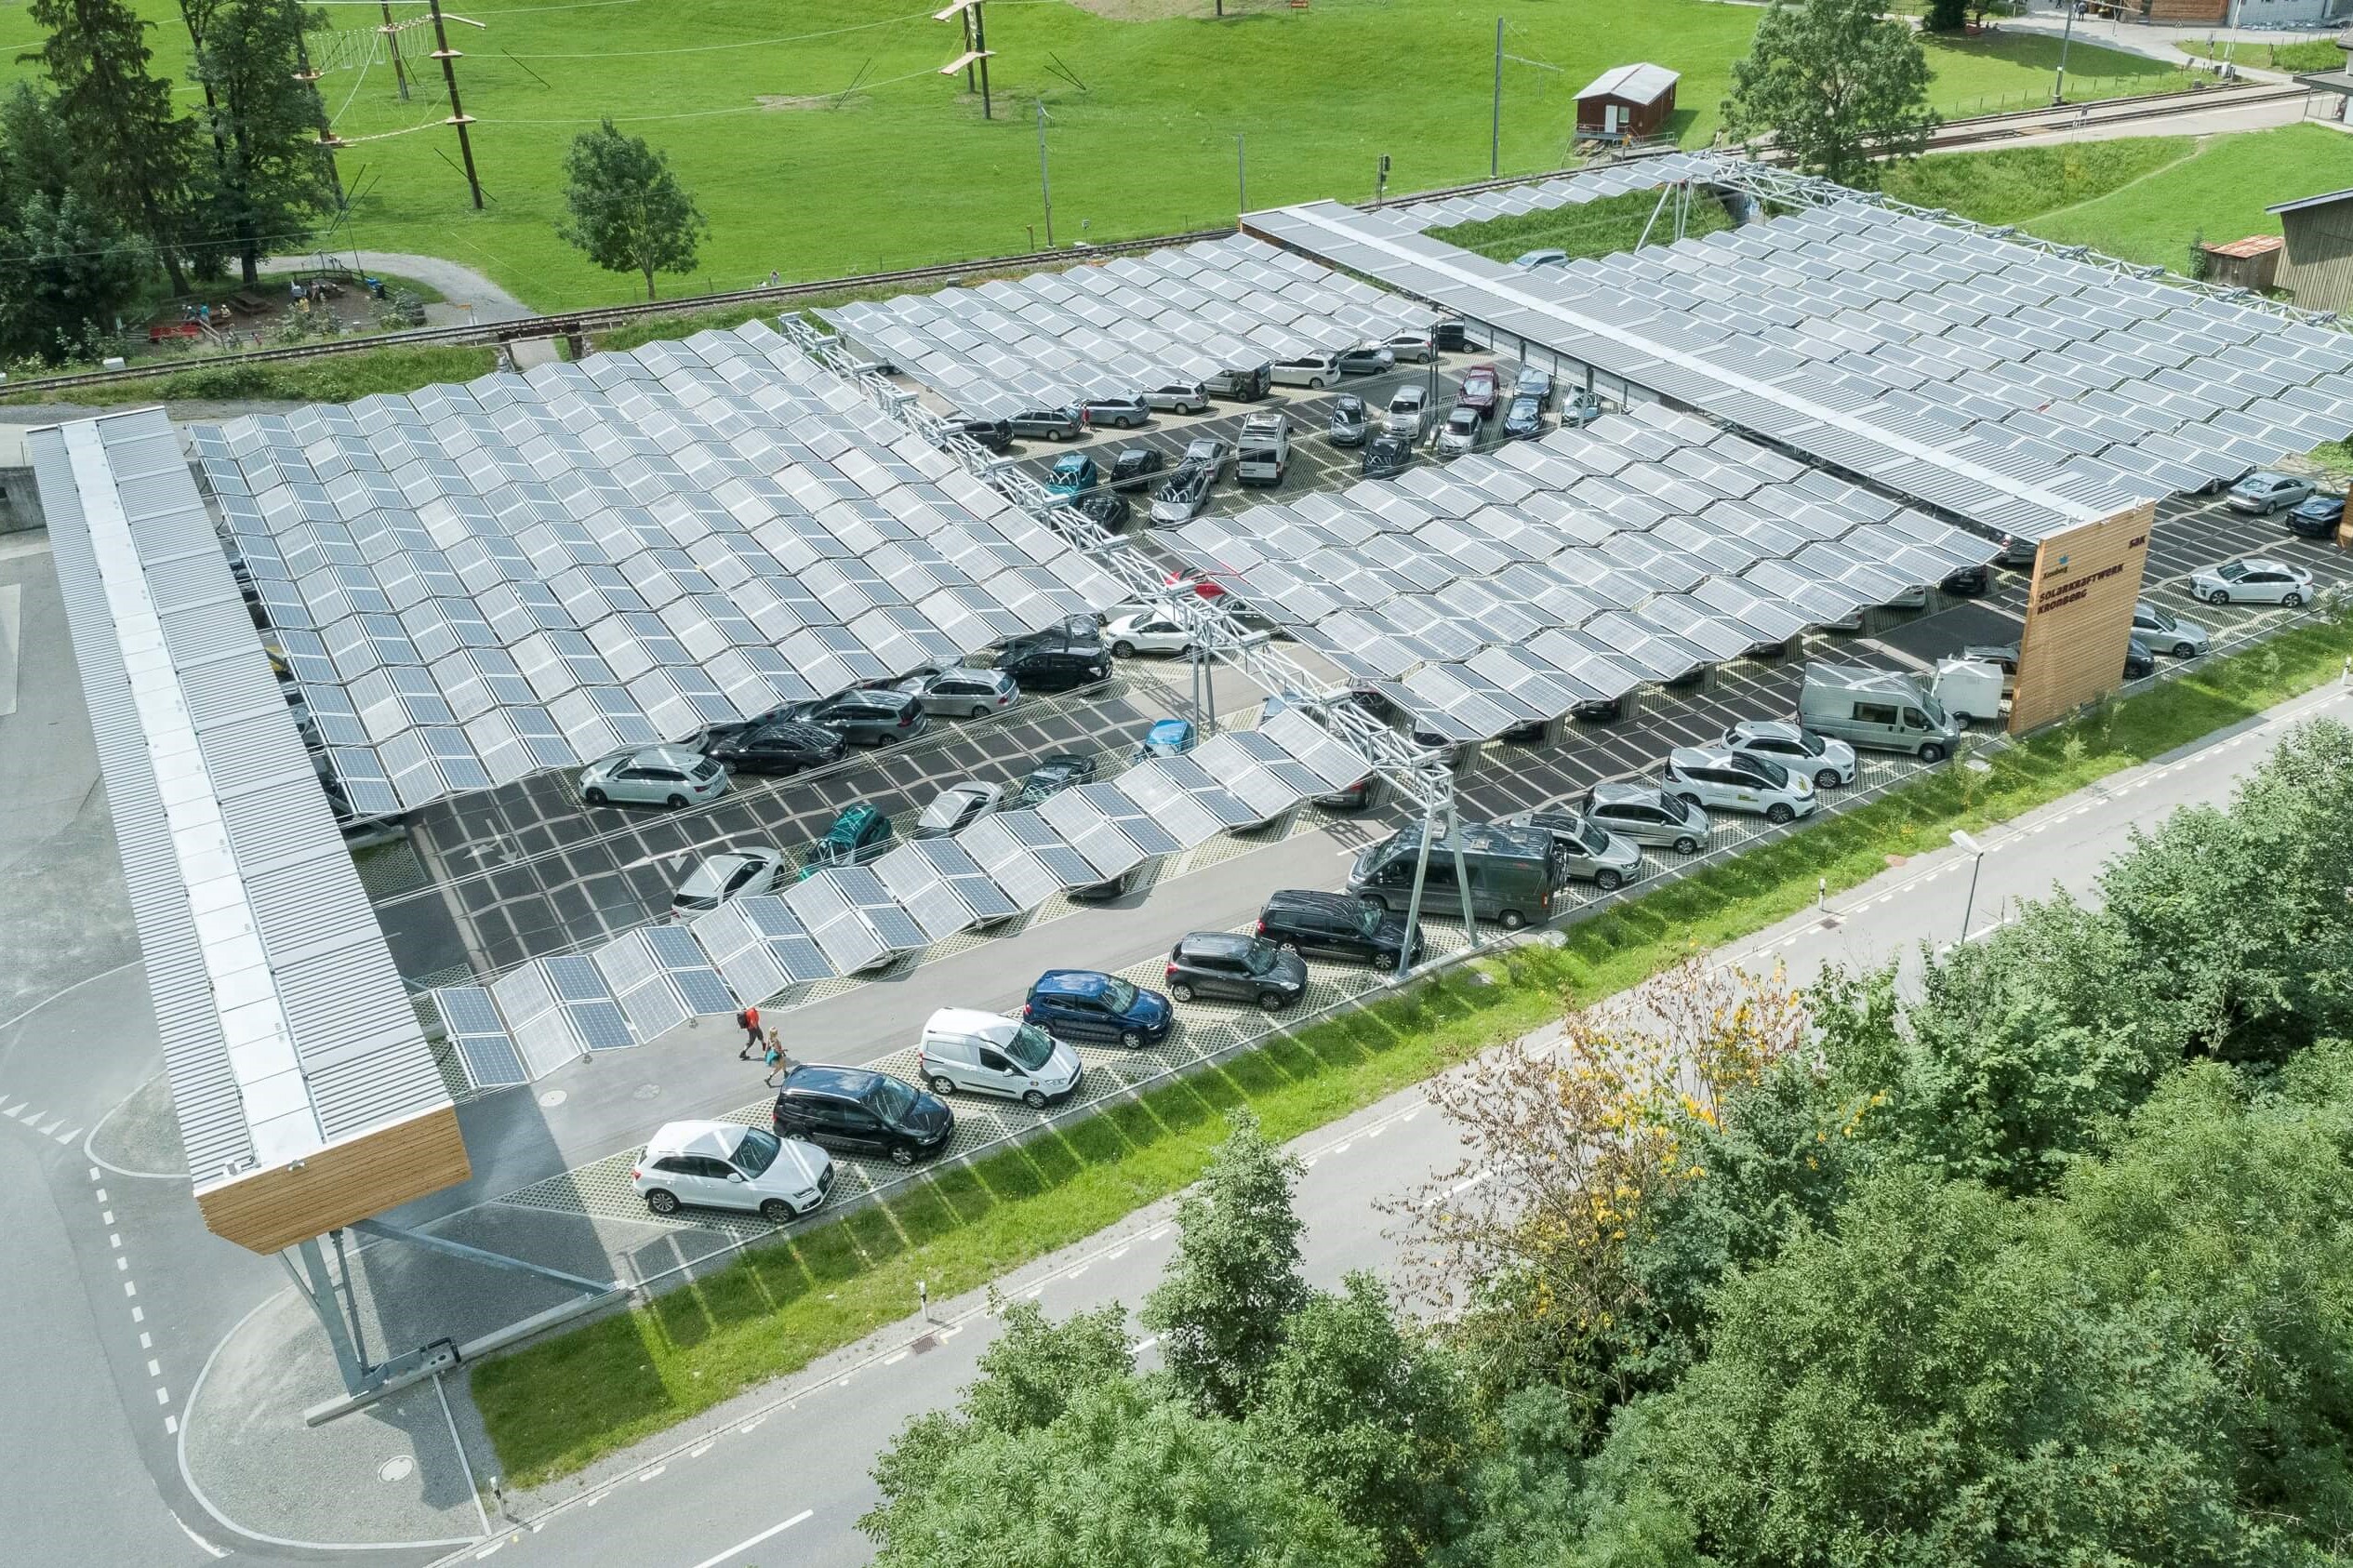 Solarfaltdach über der Parkfläche der Luftseilbahn Kronberg, Jakobsbad (AI) | © dhp technology